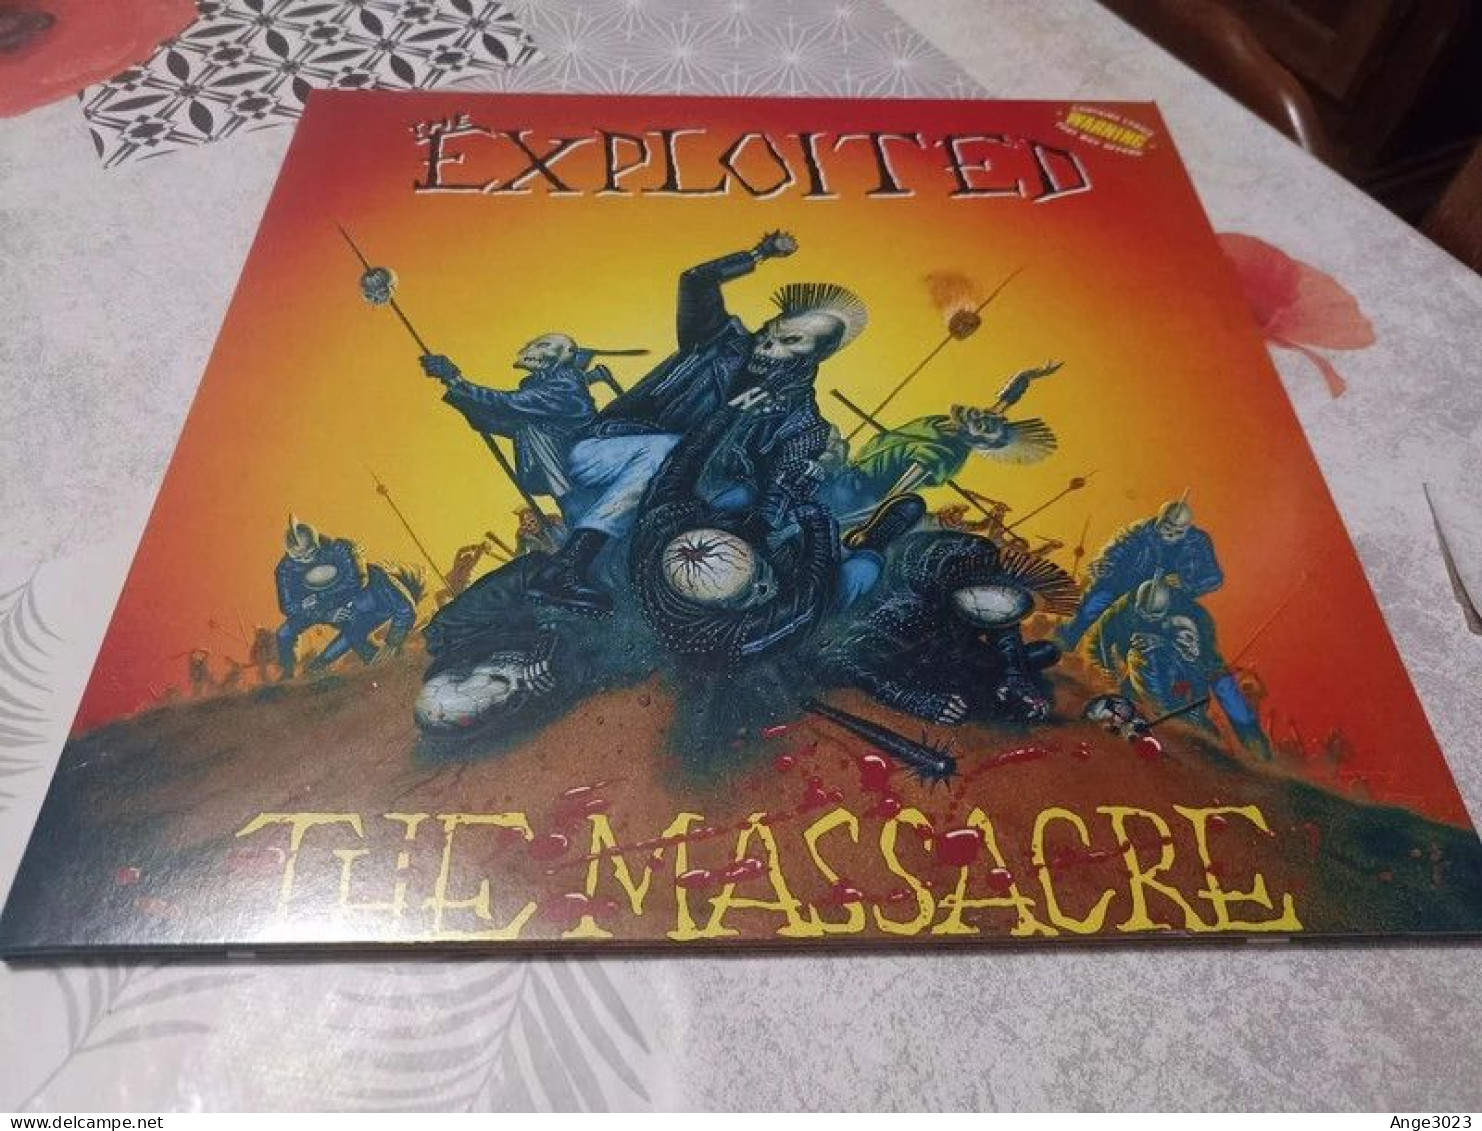 THE EXPLOITED "The Massacre" - Punk